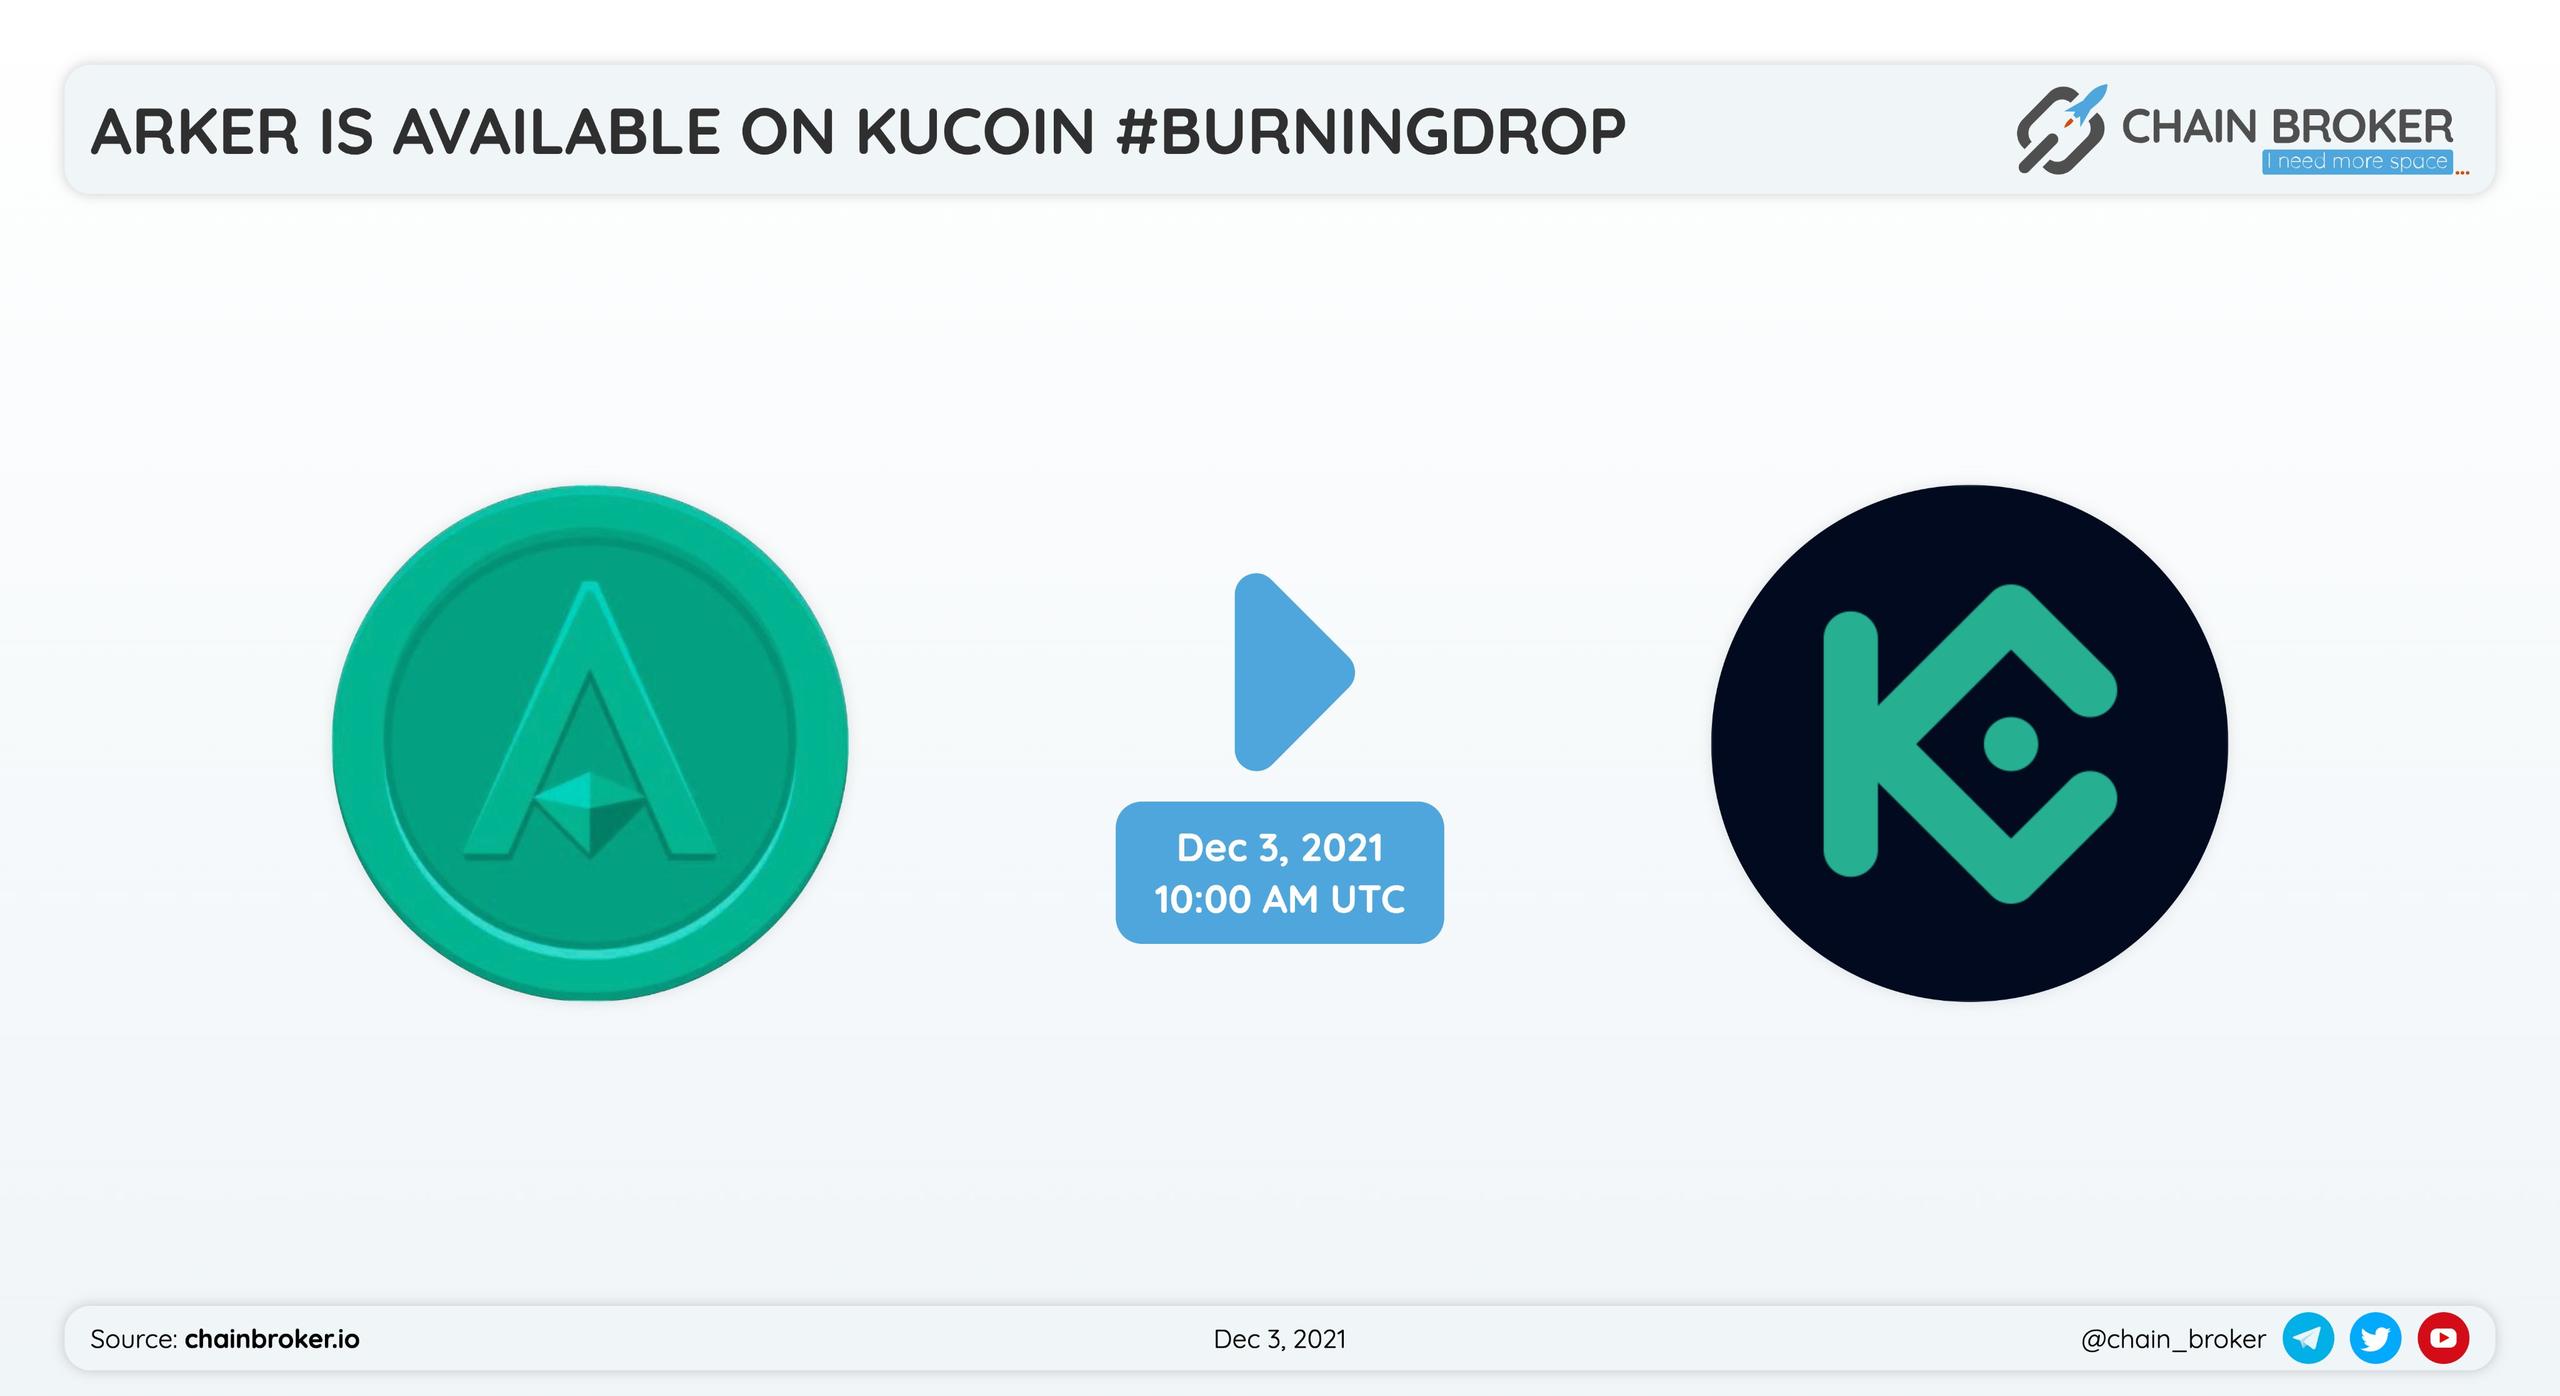 Arker is hosting a #BurningDrop on Kucoin